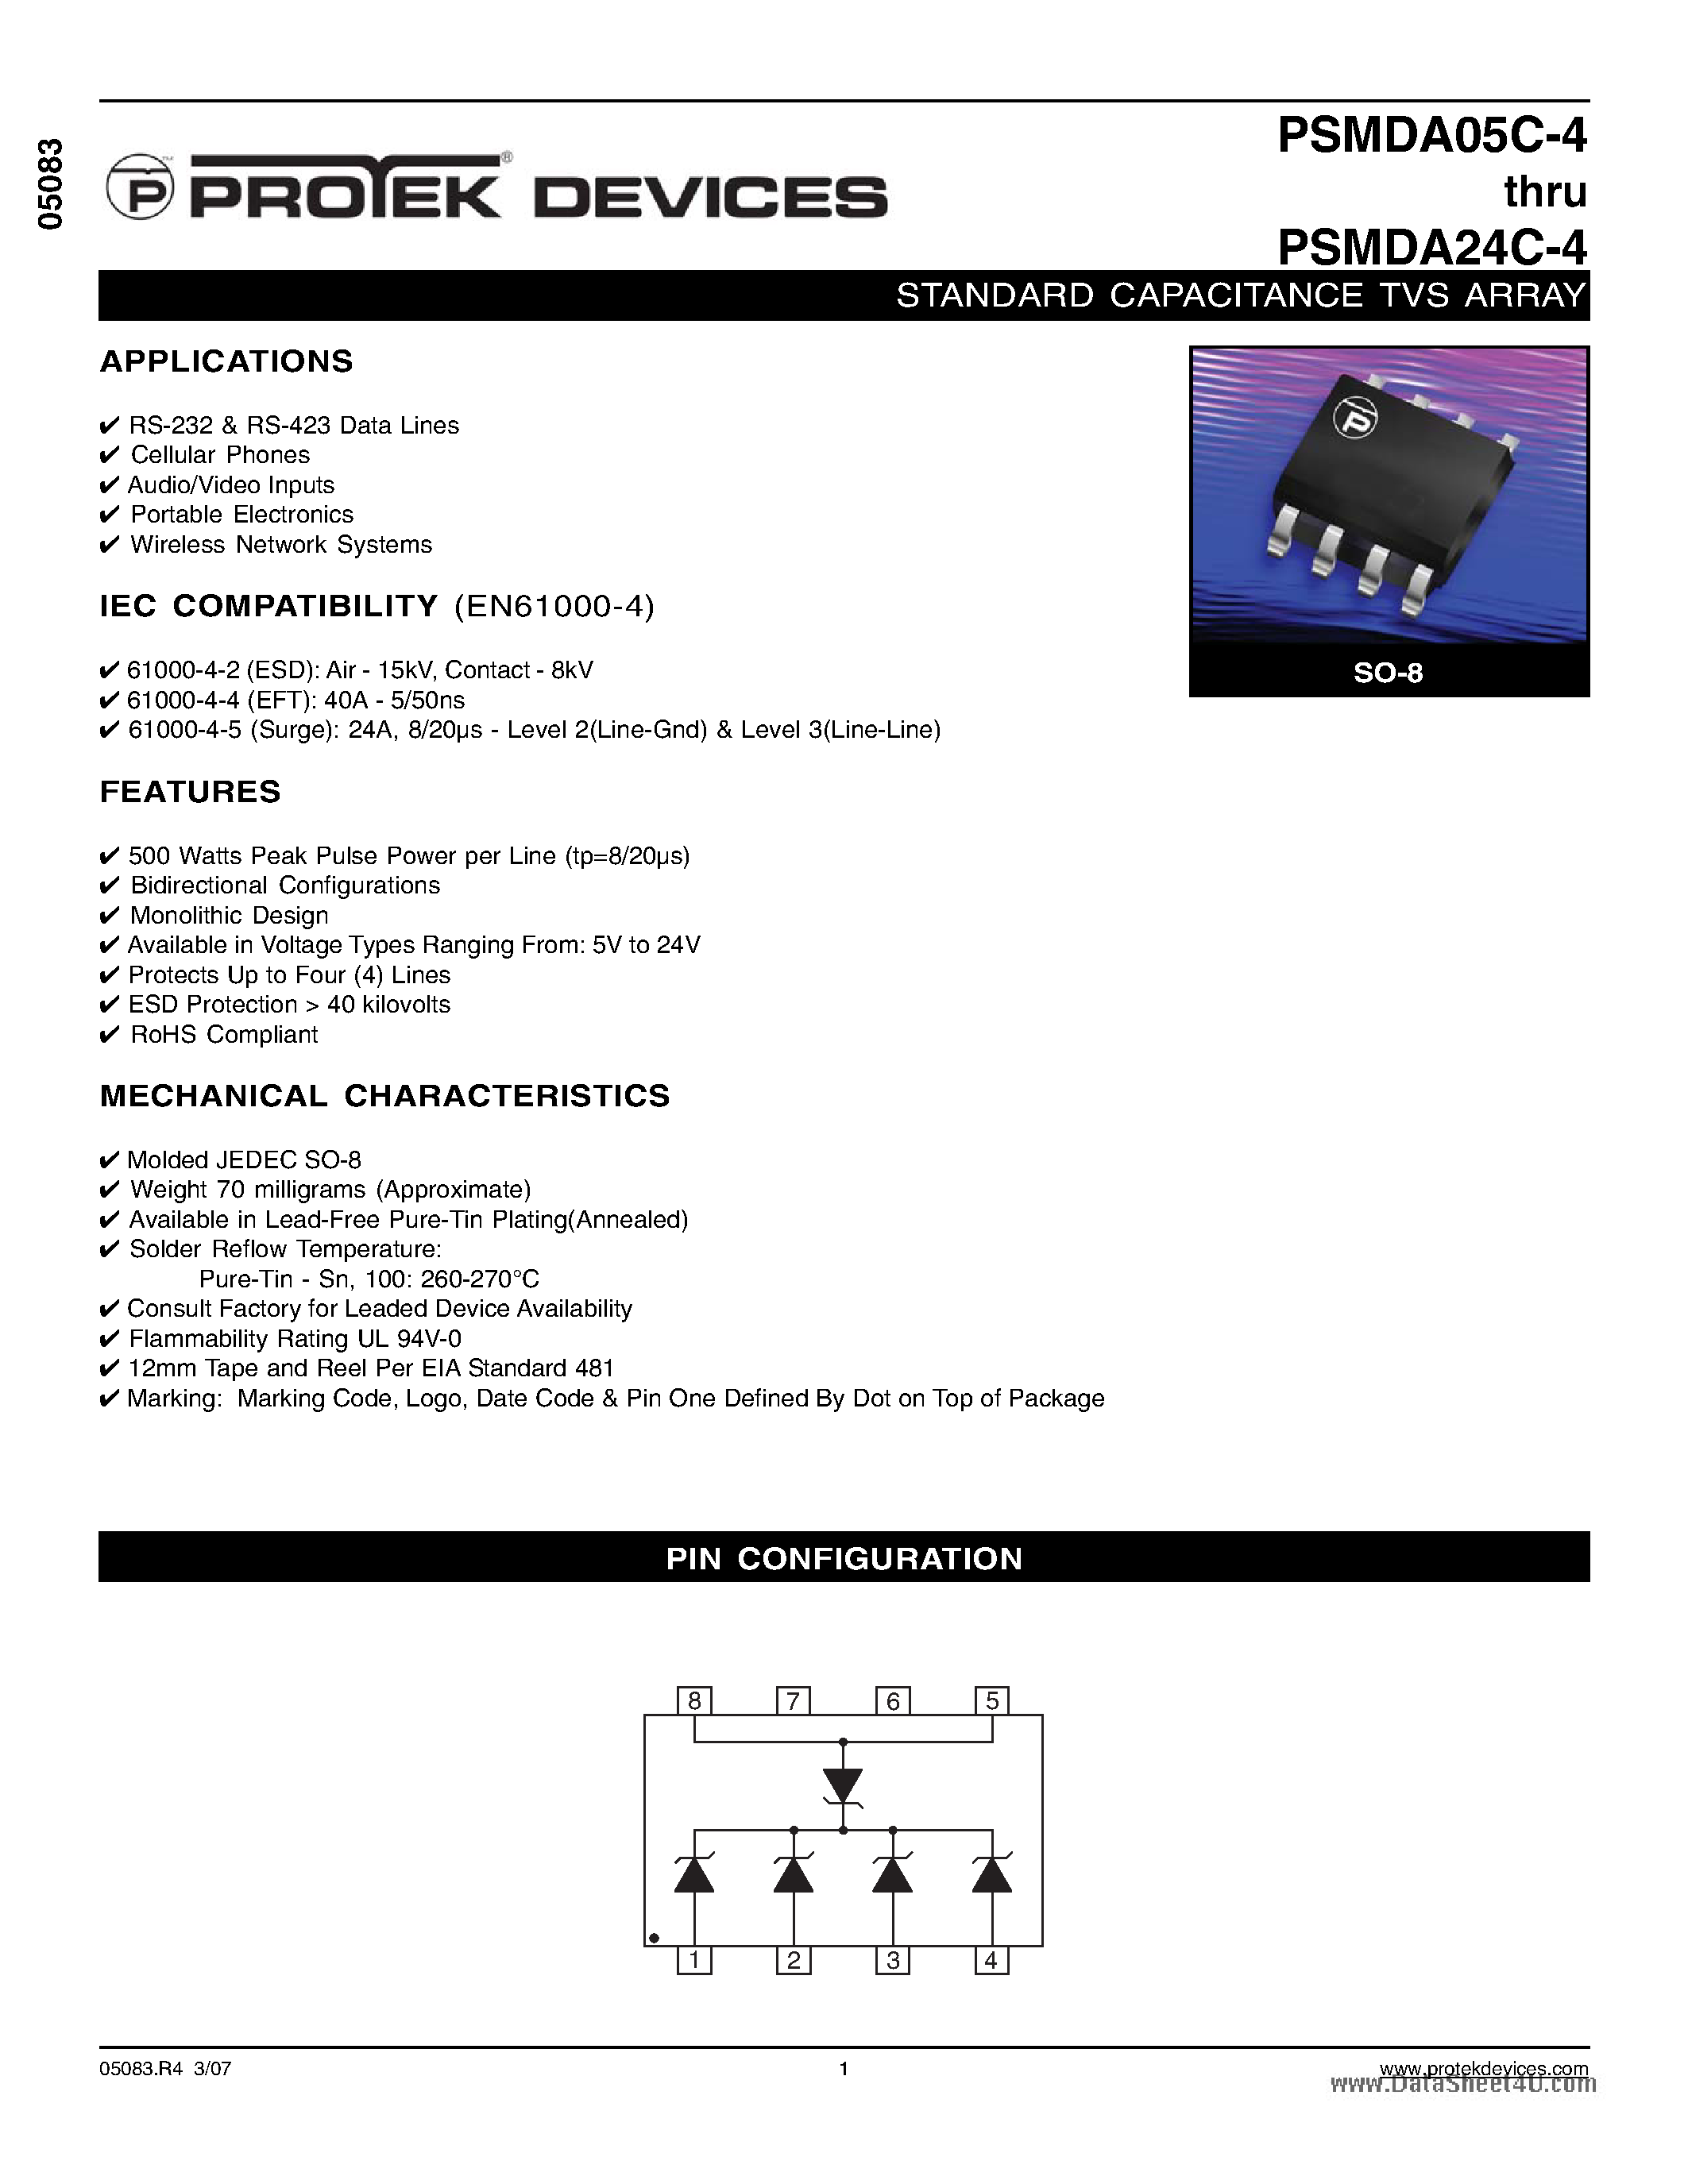 Datasheet PSMDA05C-4 - (PSMDA05C-4 - PSMDA24C-4) STANDARD CAPACITANCE TVS ARRAY page 1